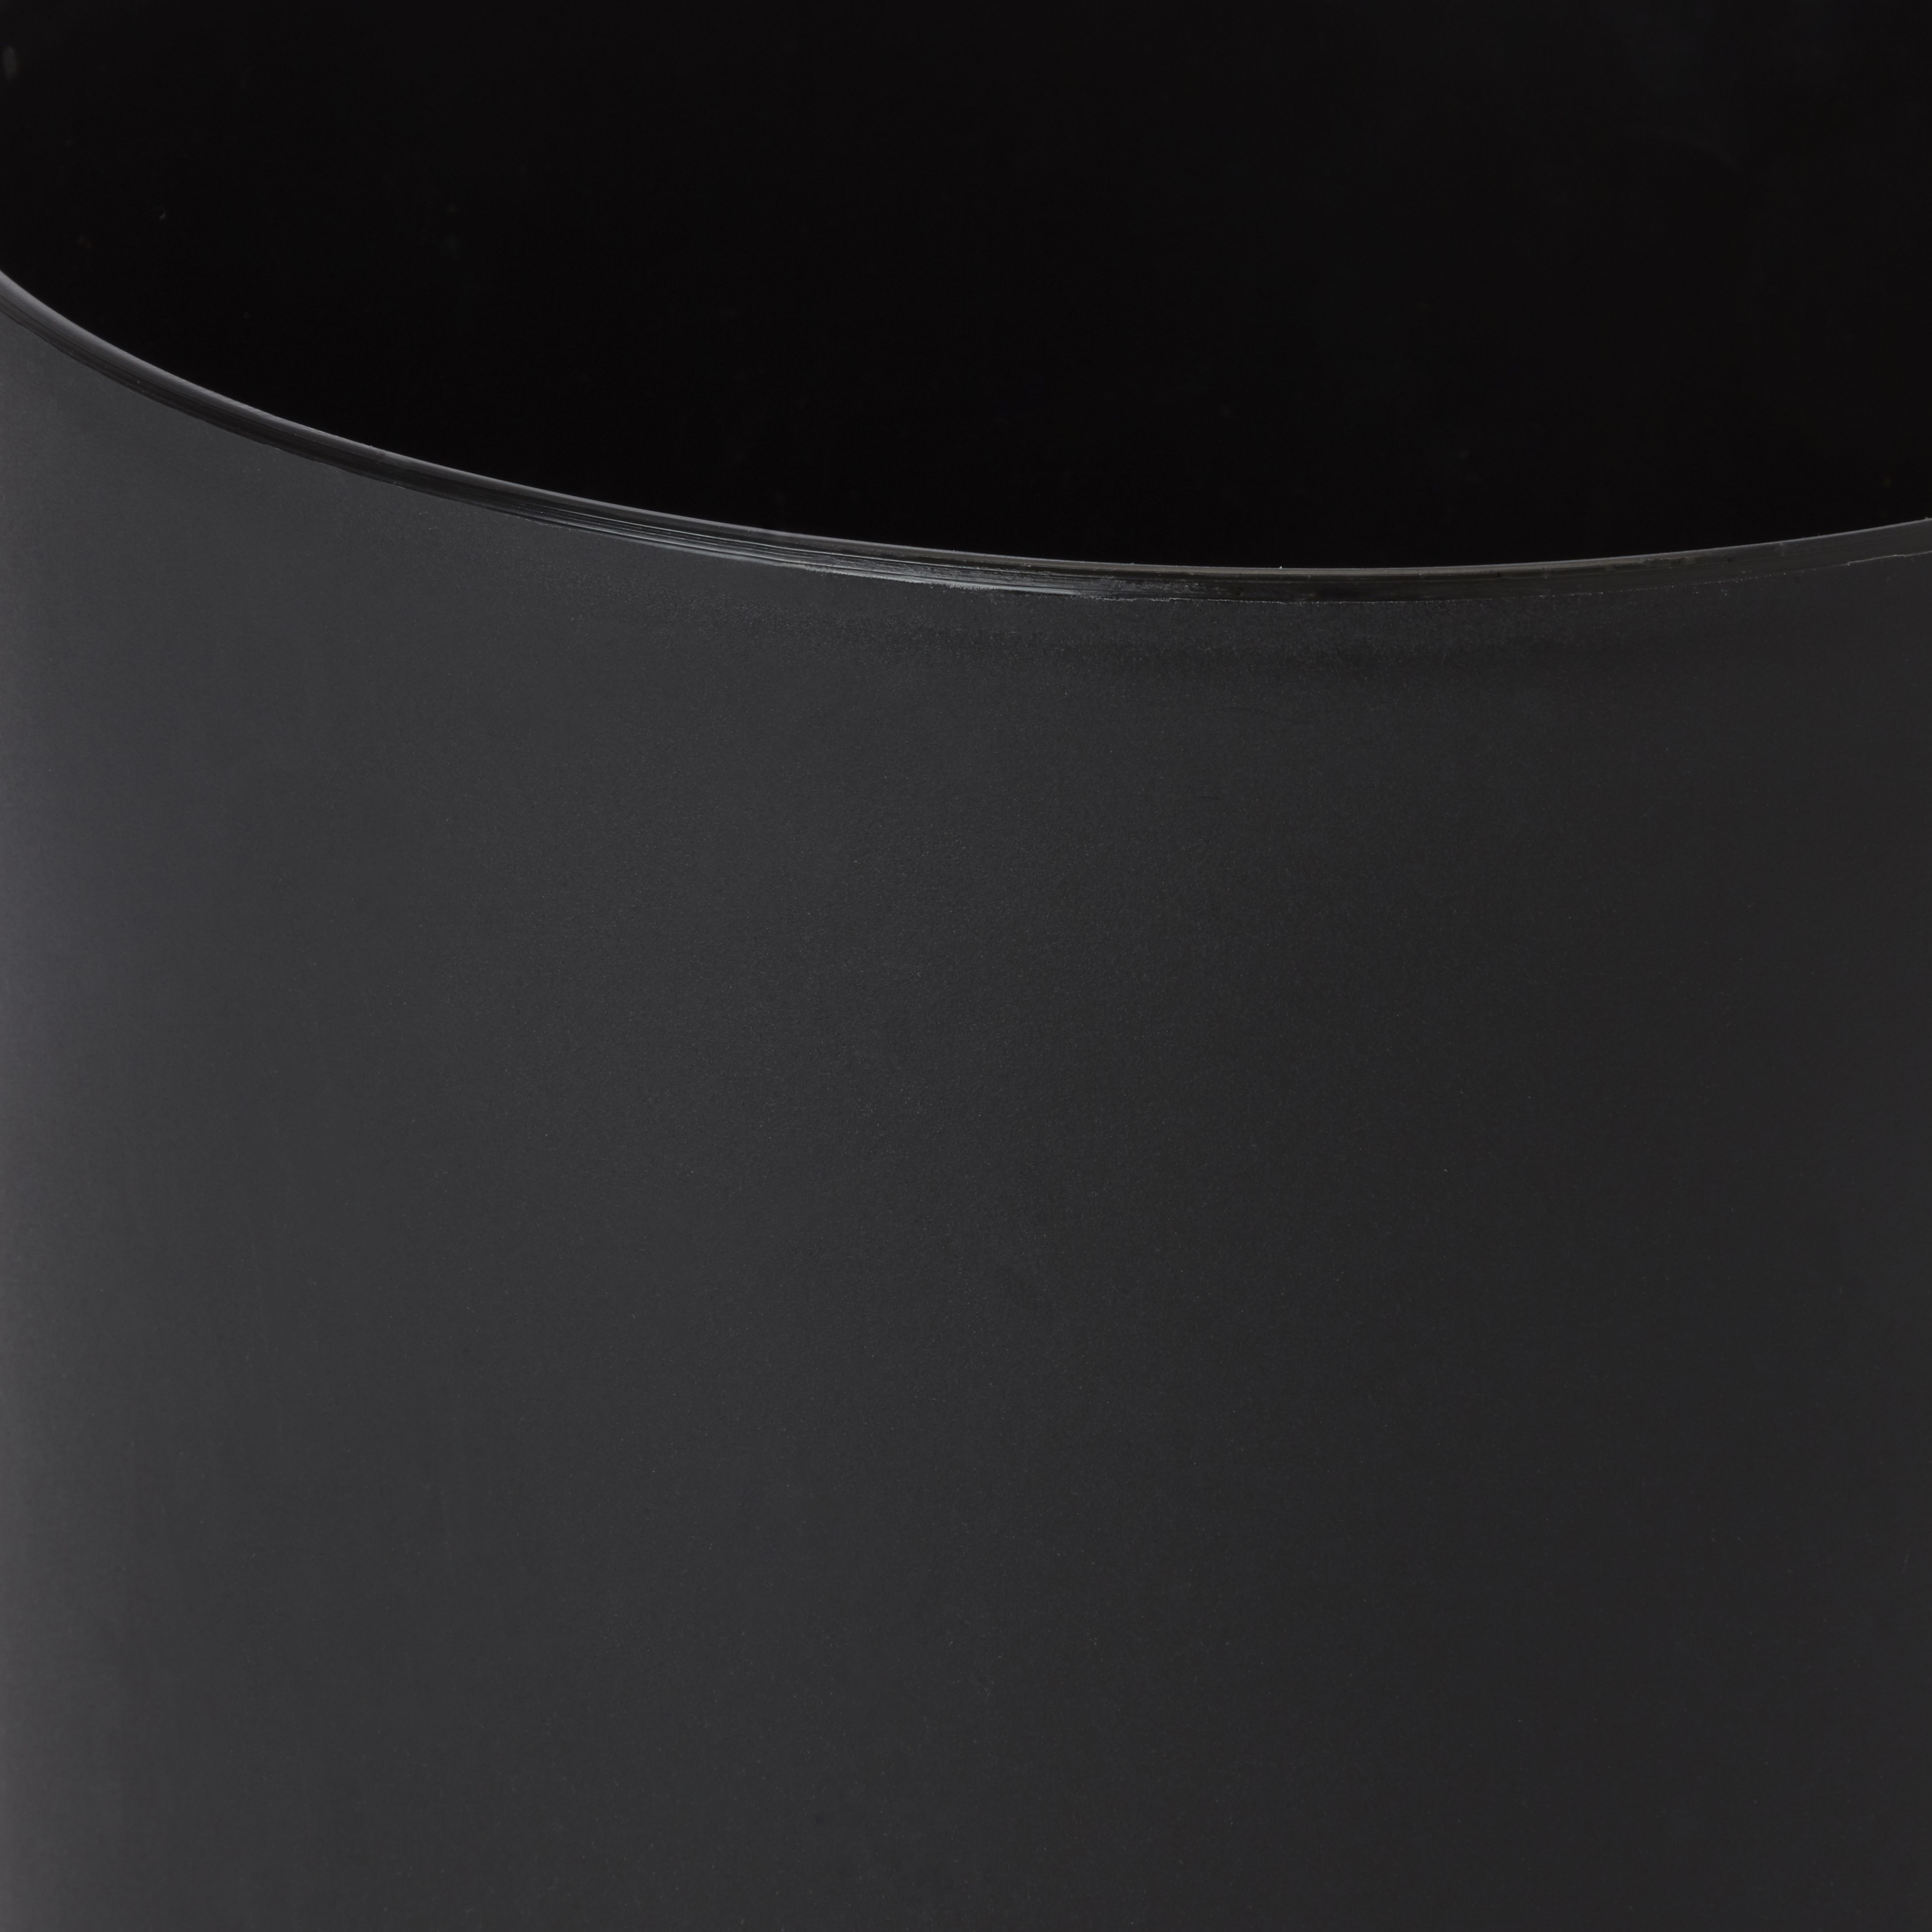 Black Plastic Plain Round Plant pot (Dia)25.1cm